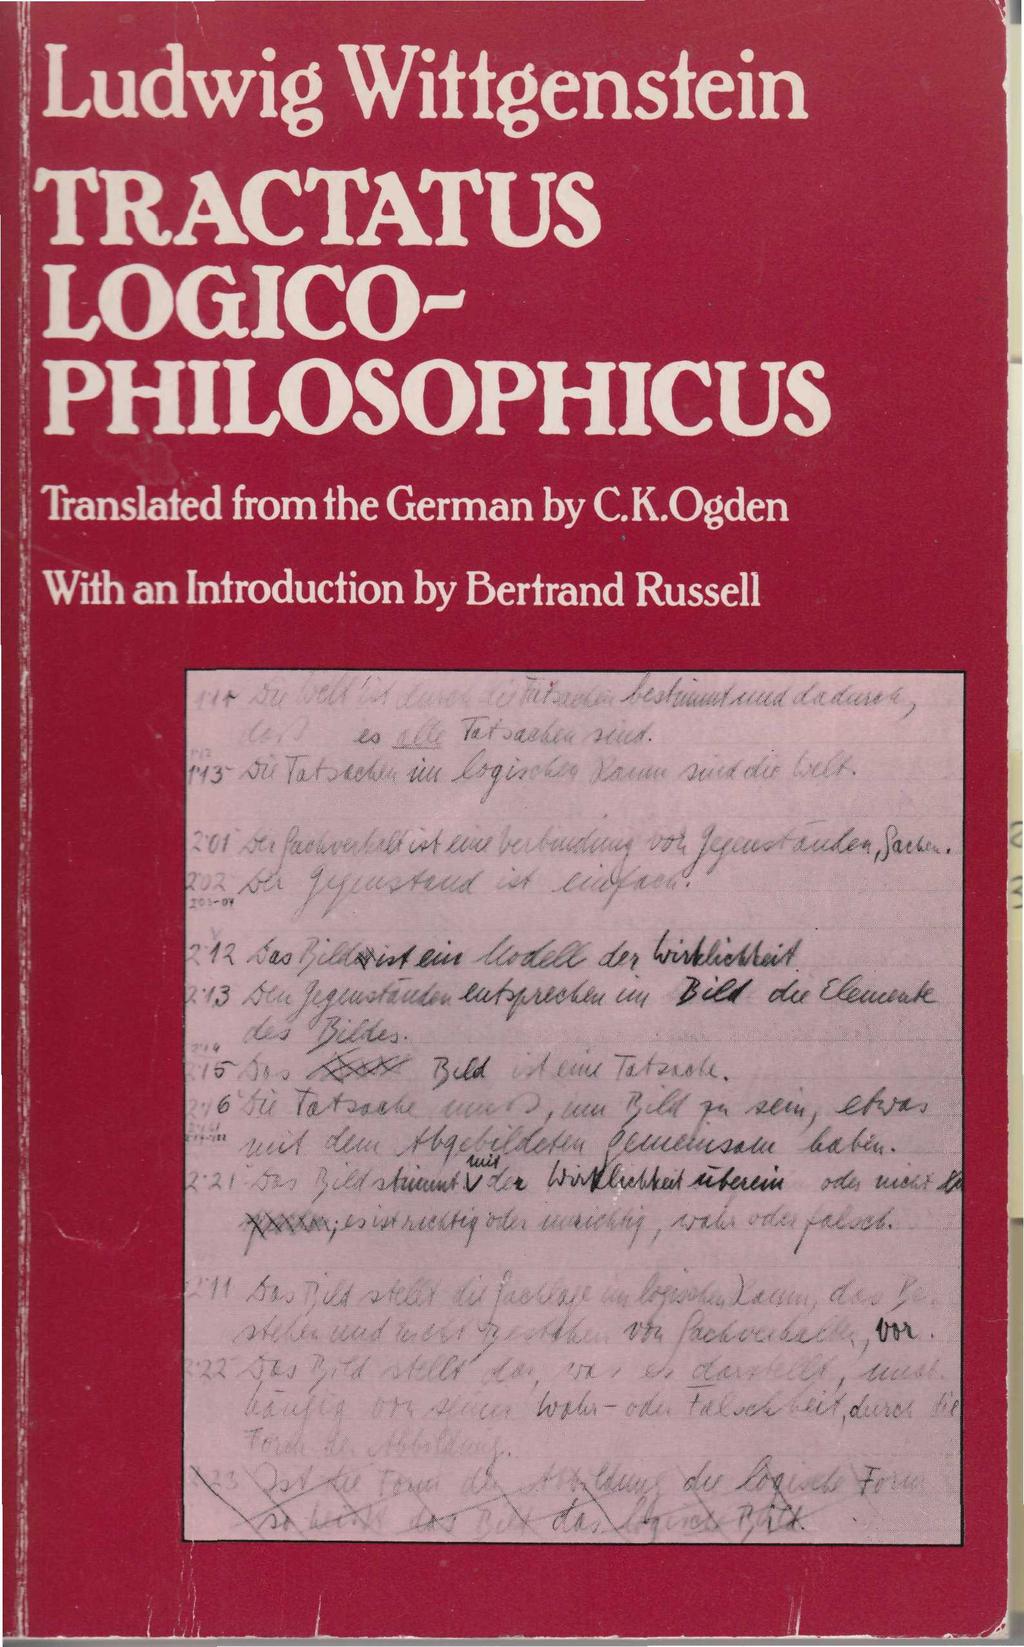 j Ludwig Wittgenstein TRACTATUS xoaico- PHILOSOPHICUS \ Translated